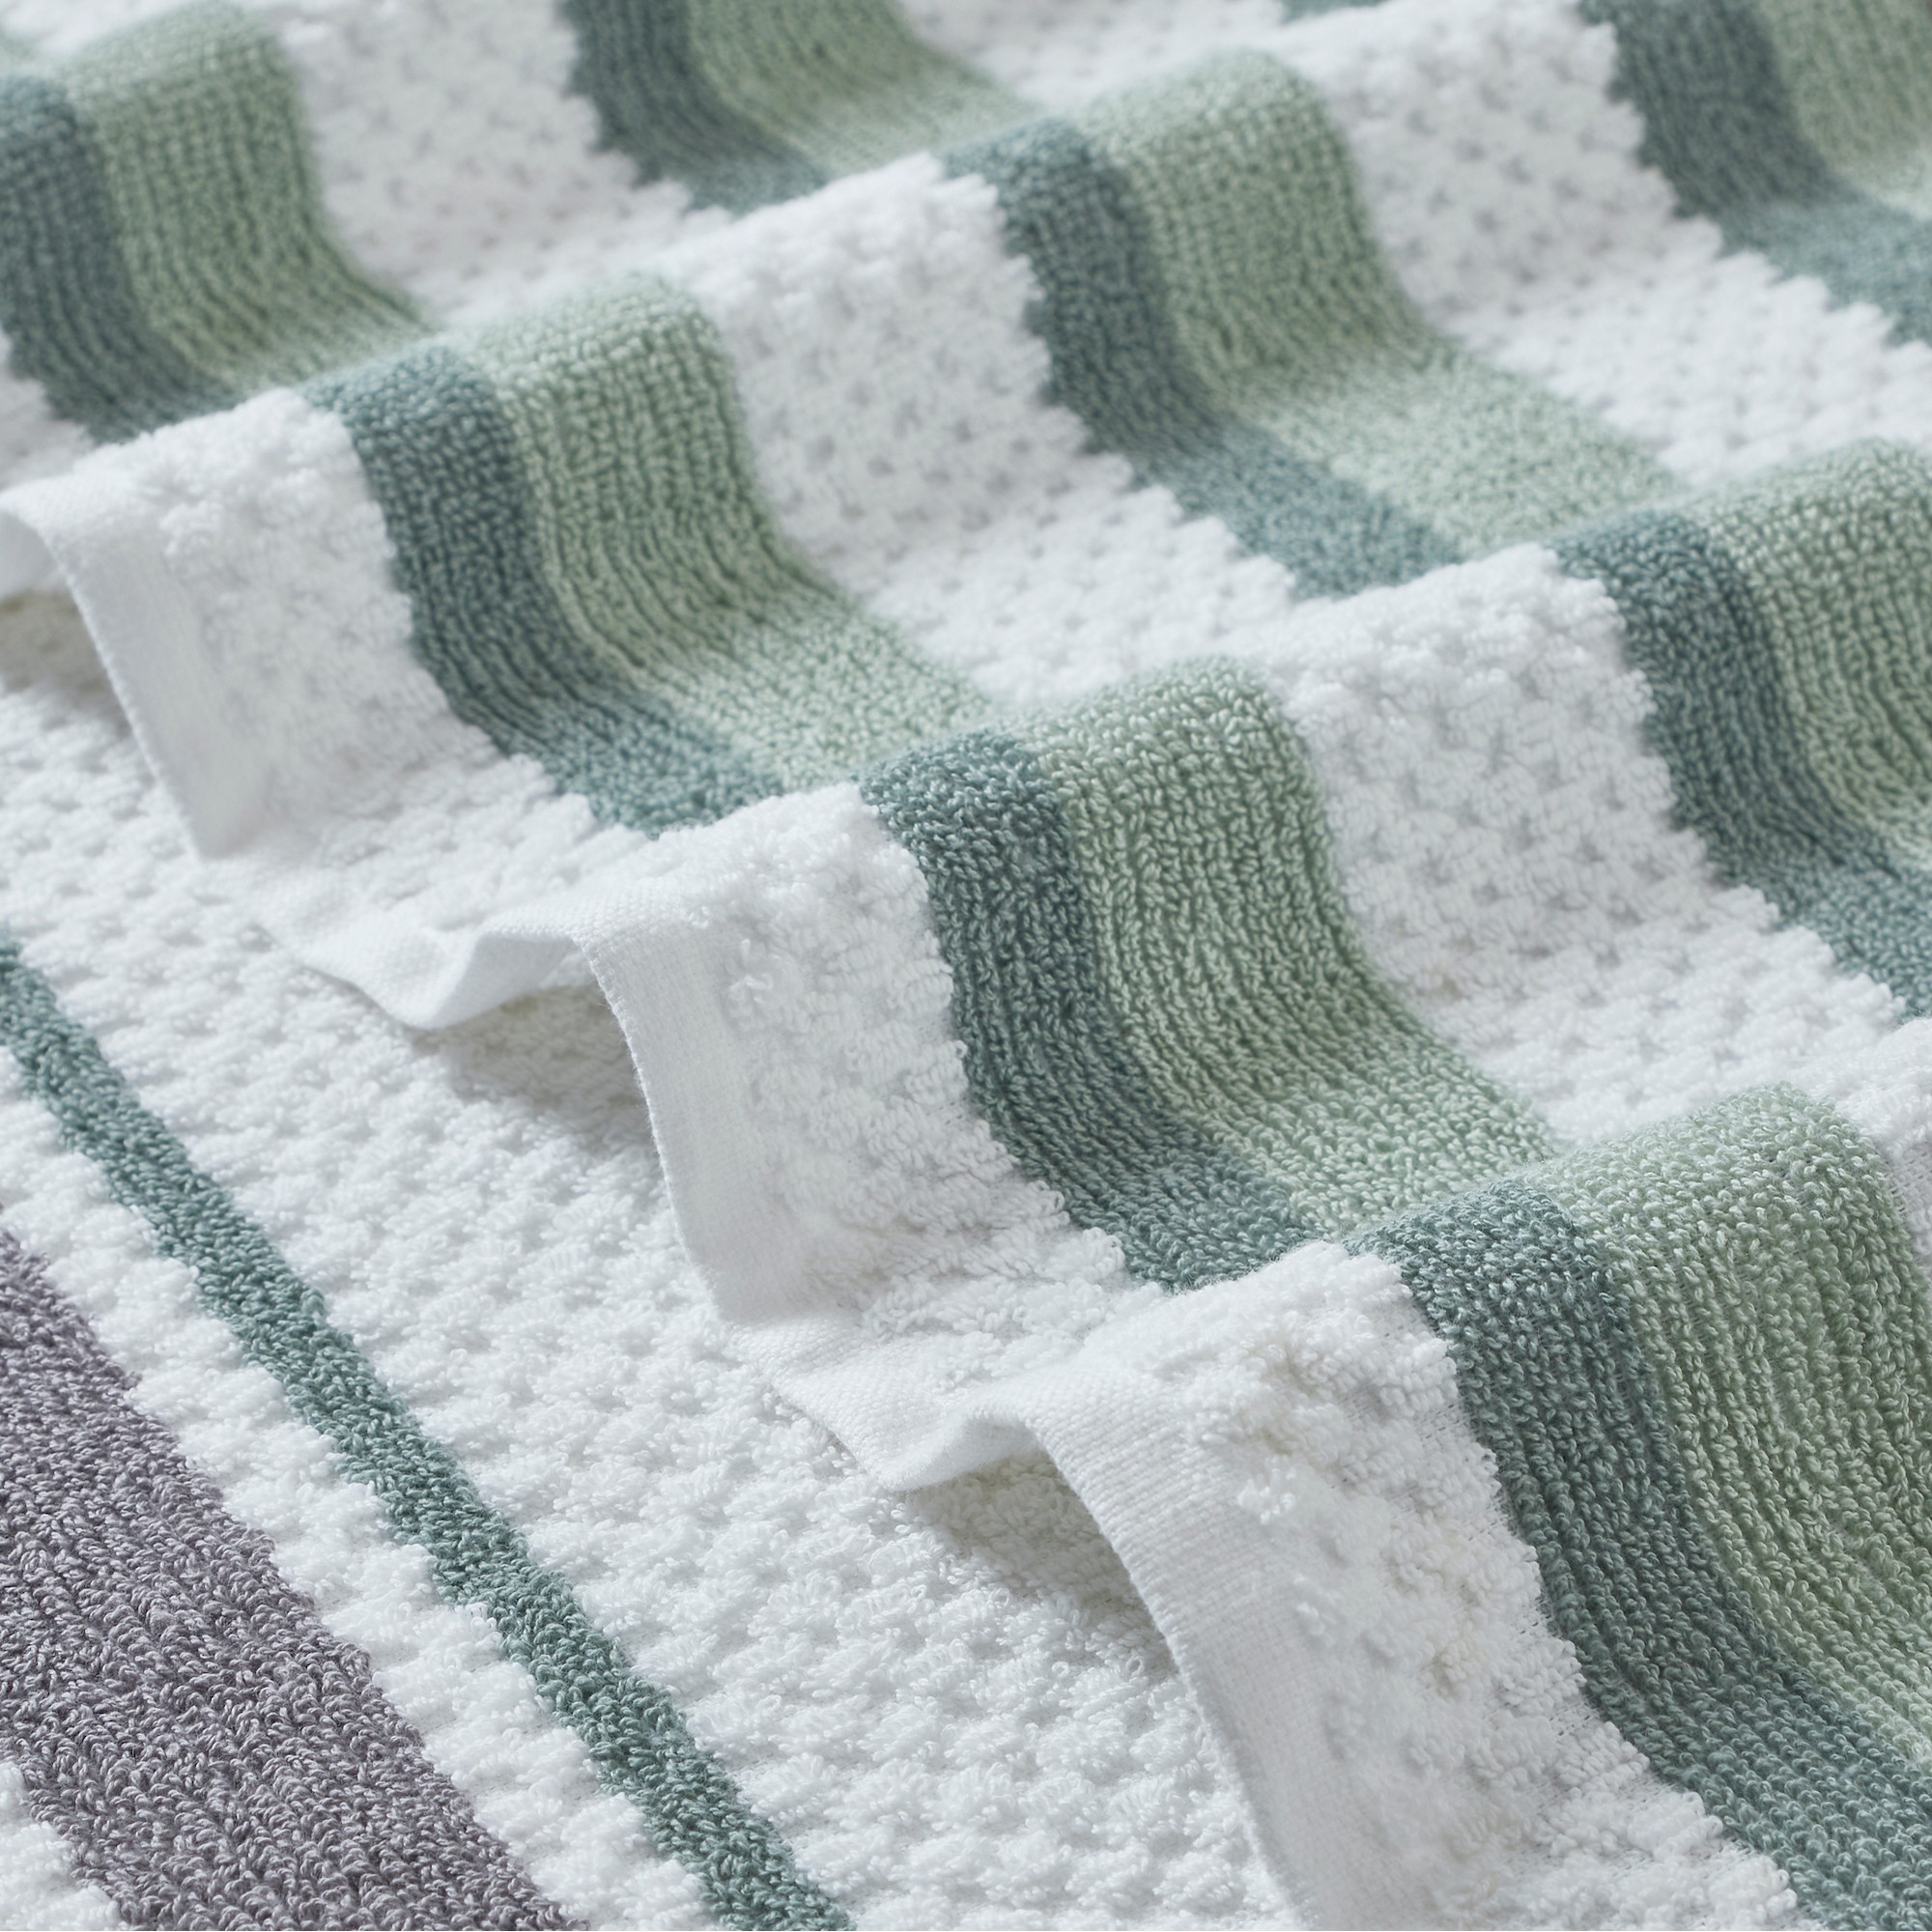 Nyx 6pc Soft Cotton Towel Set, Striped, White, Light Gray By The Urban Port- Saltoro Sherpi